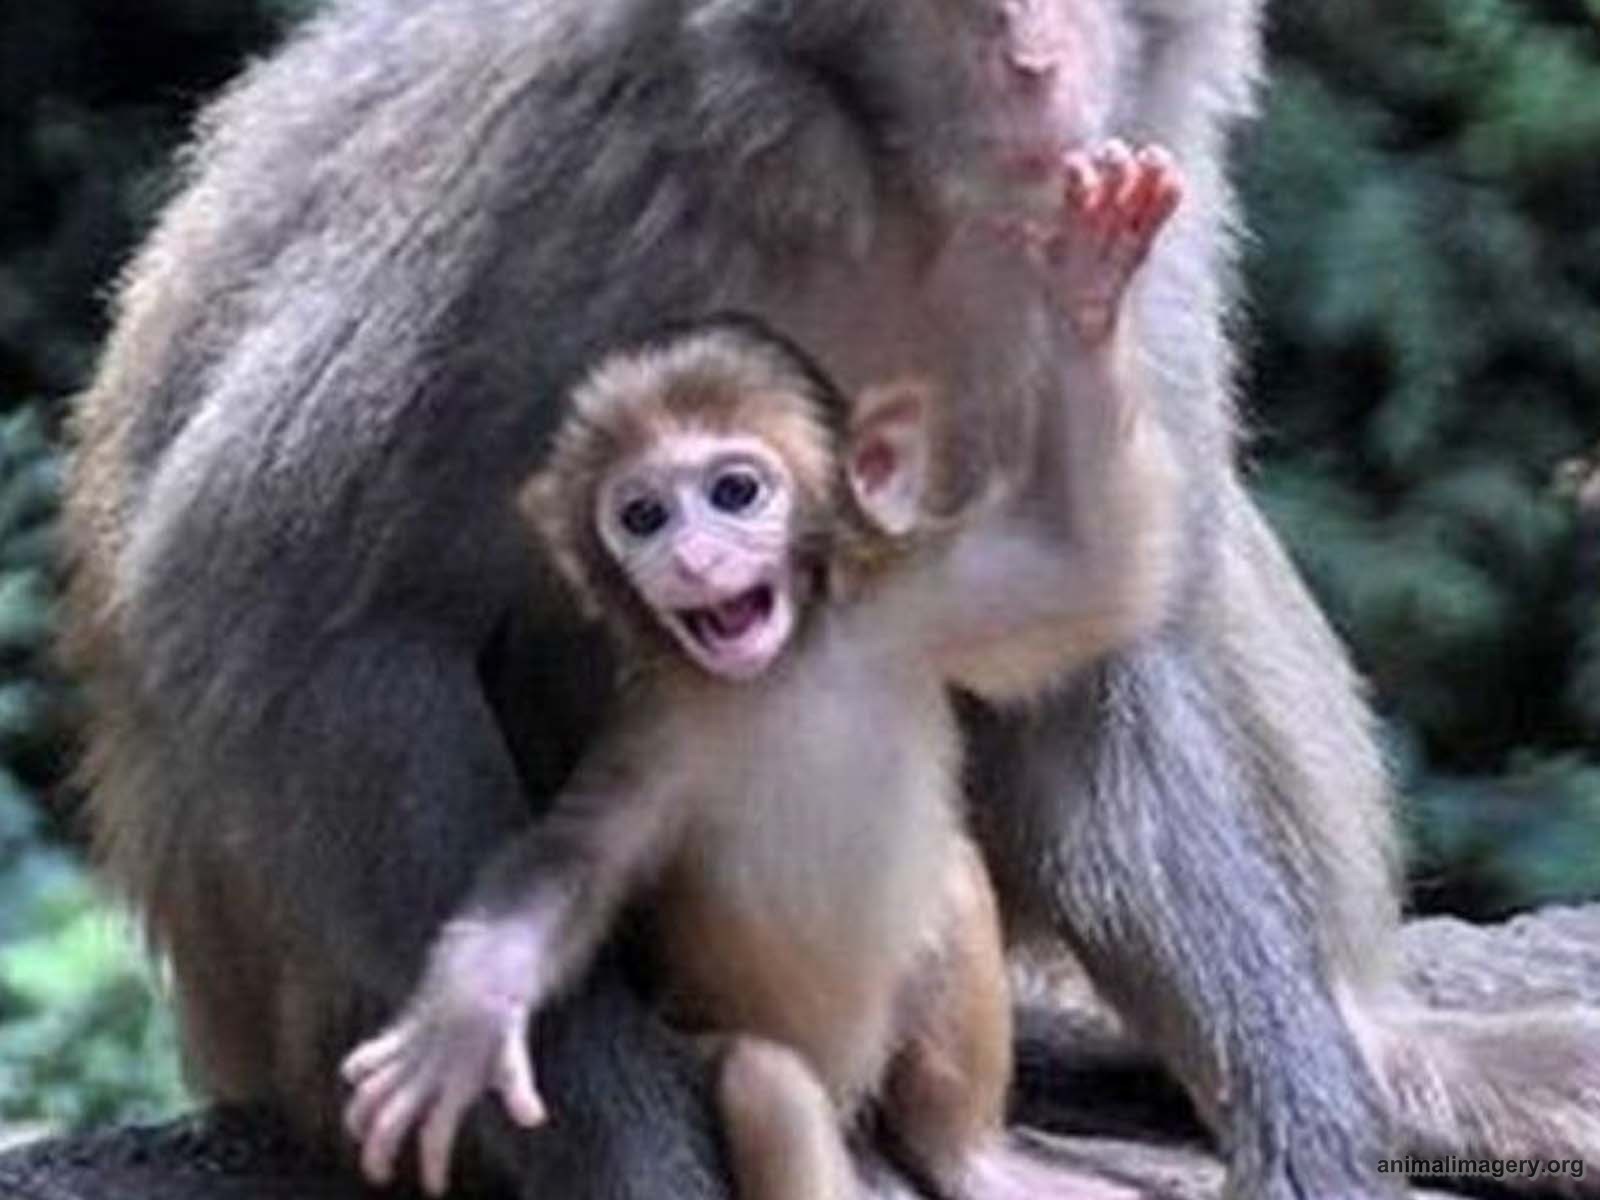 Cute Baby Monkeys Image Crazy Gallery